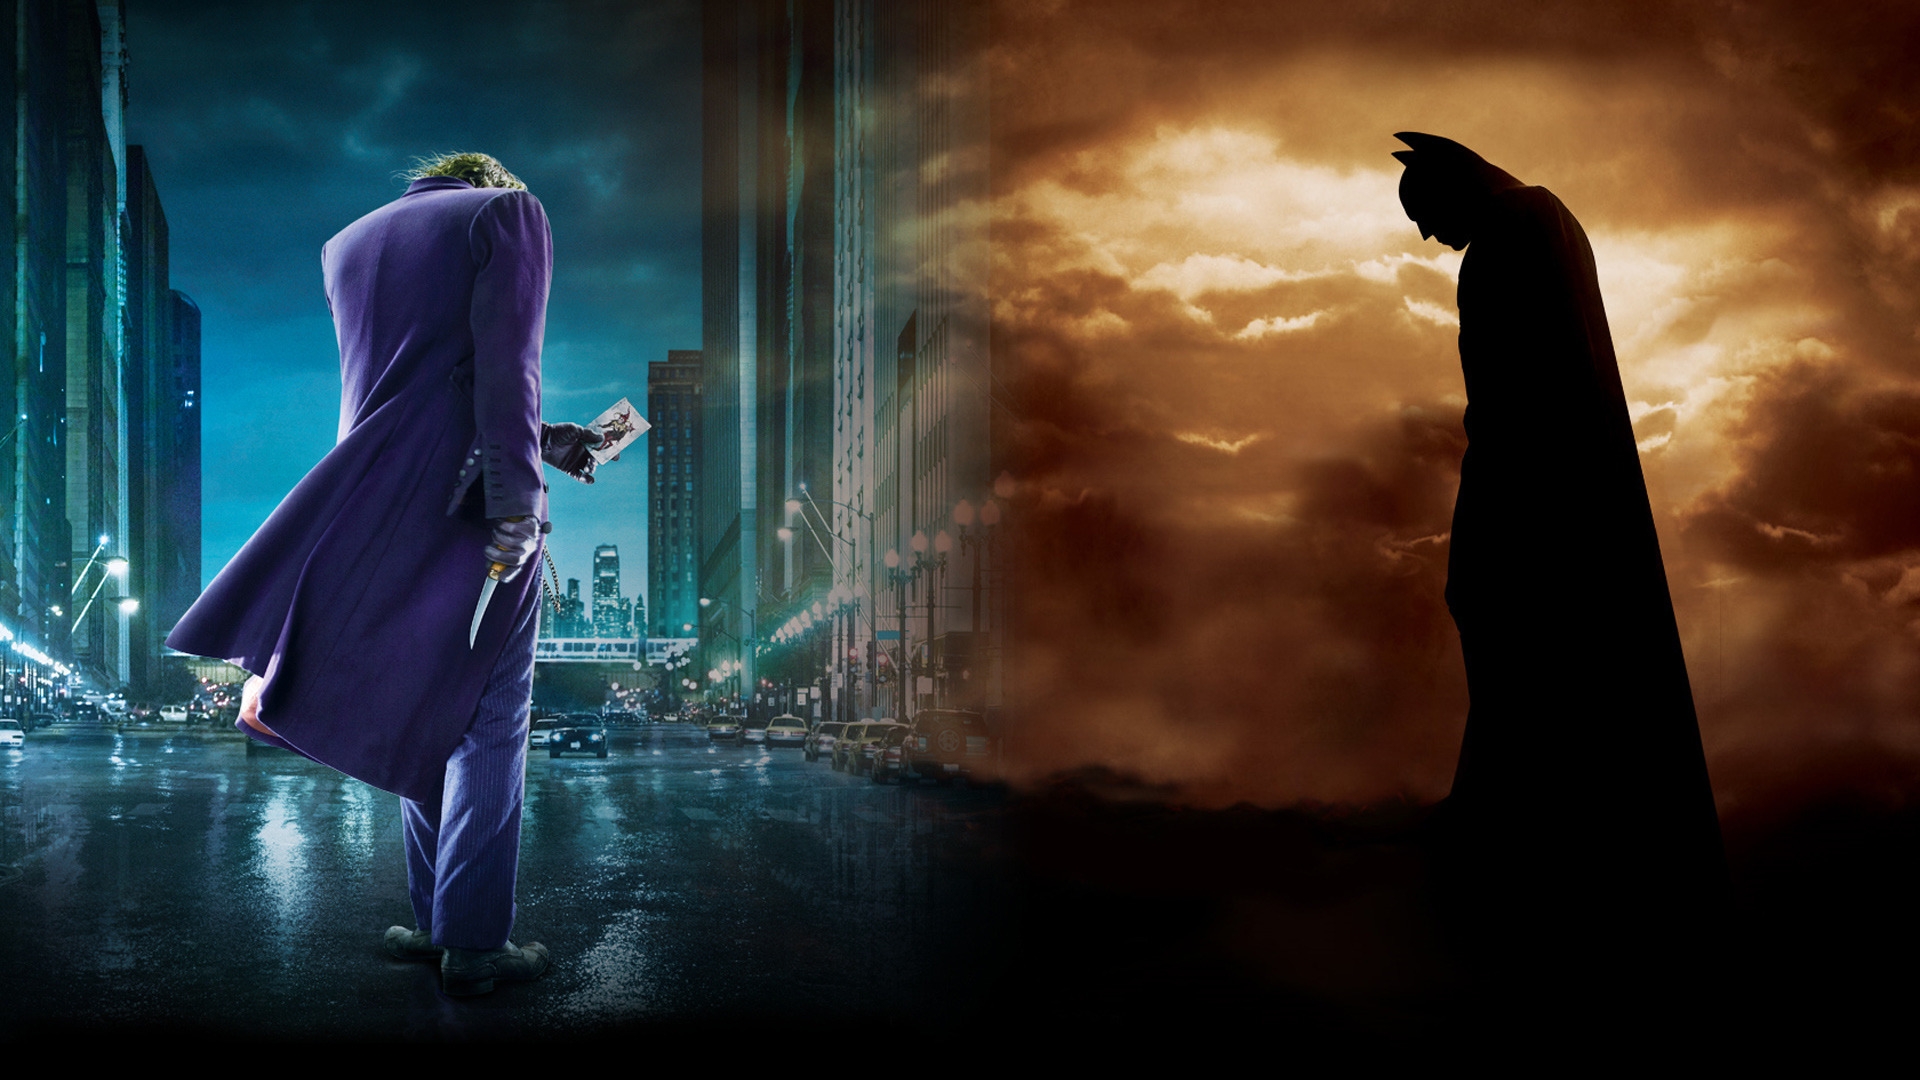 Batman and The Joker for 1920 x 1080 HDTV 1080p resolution